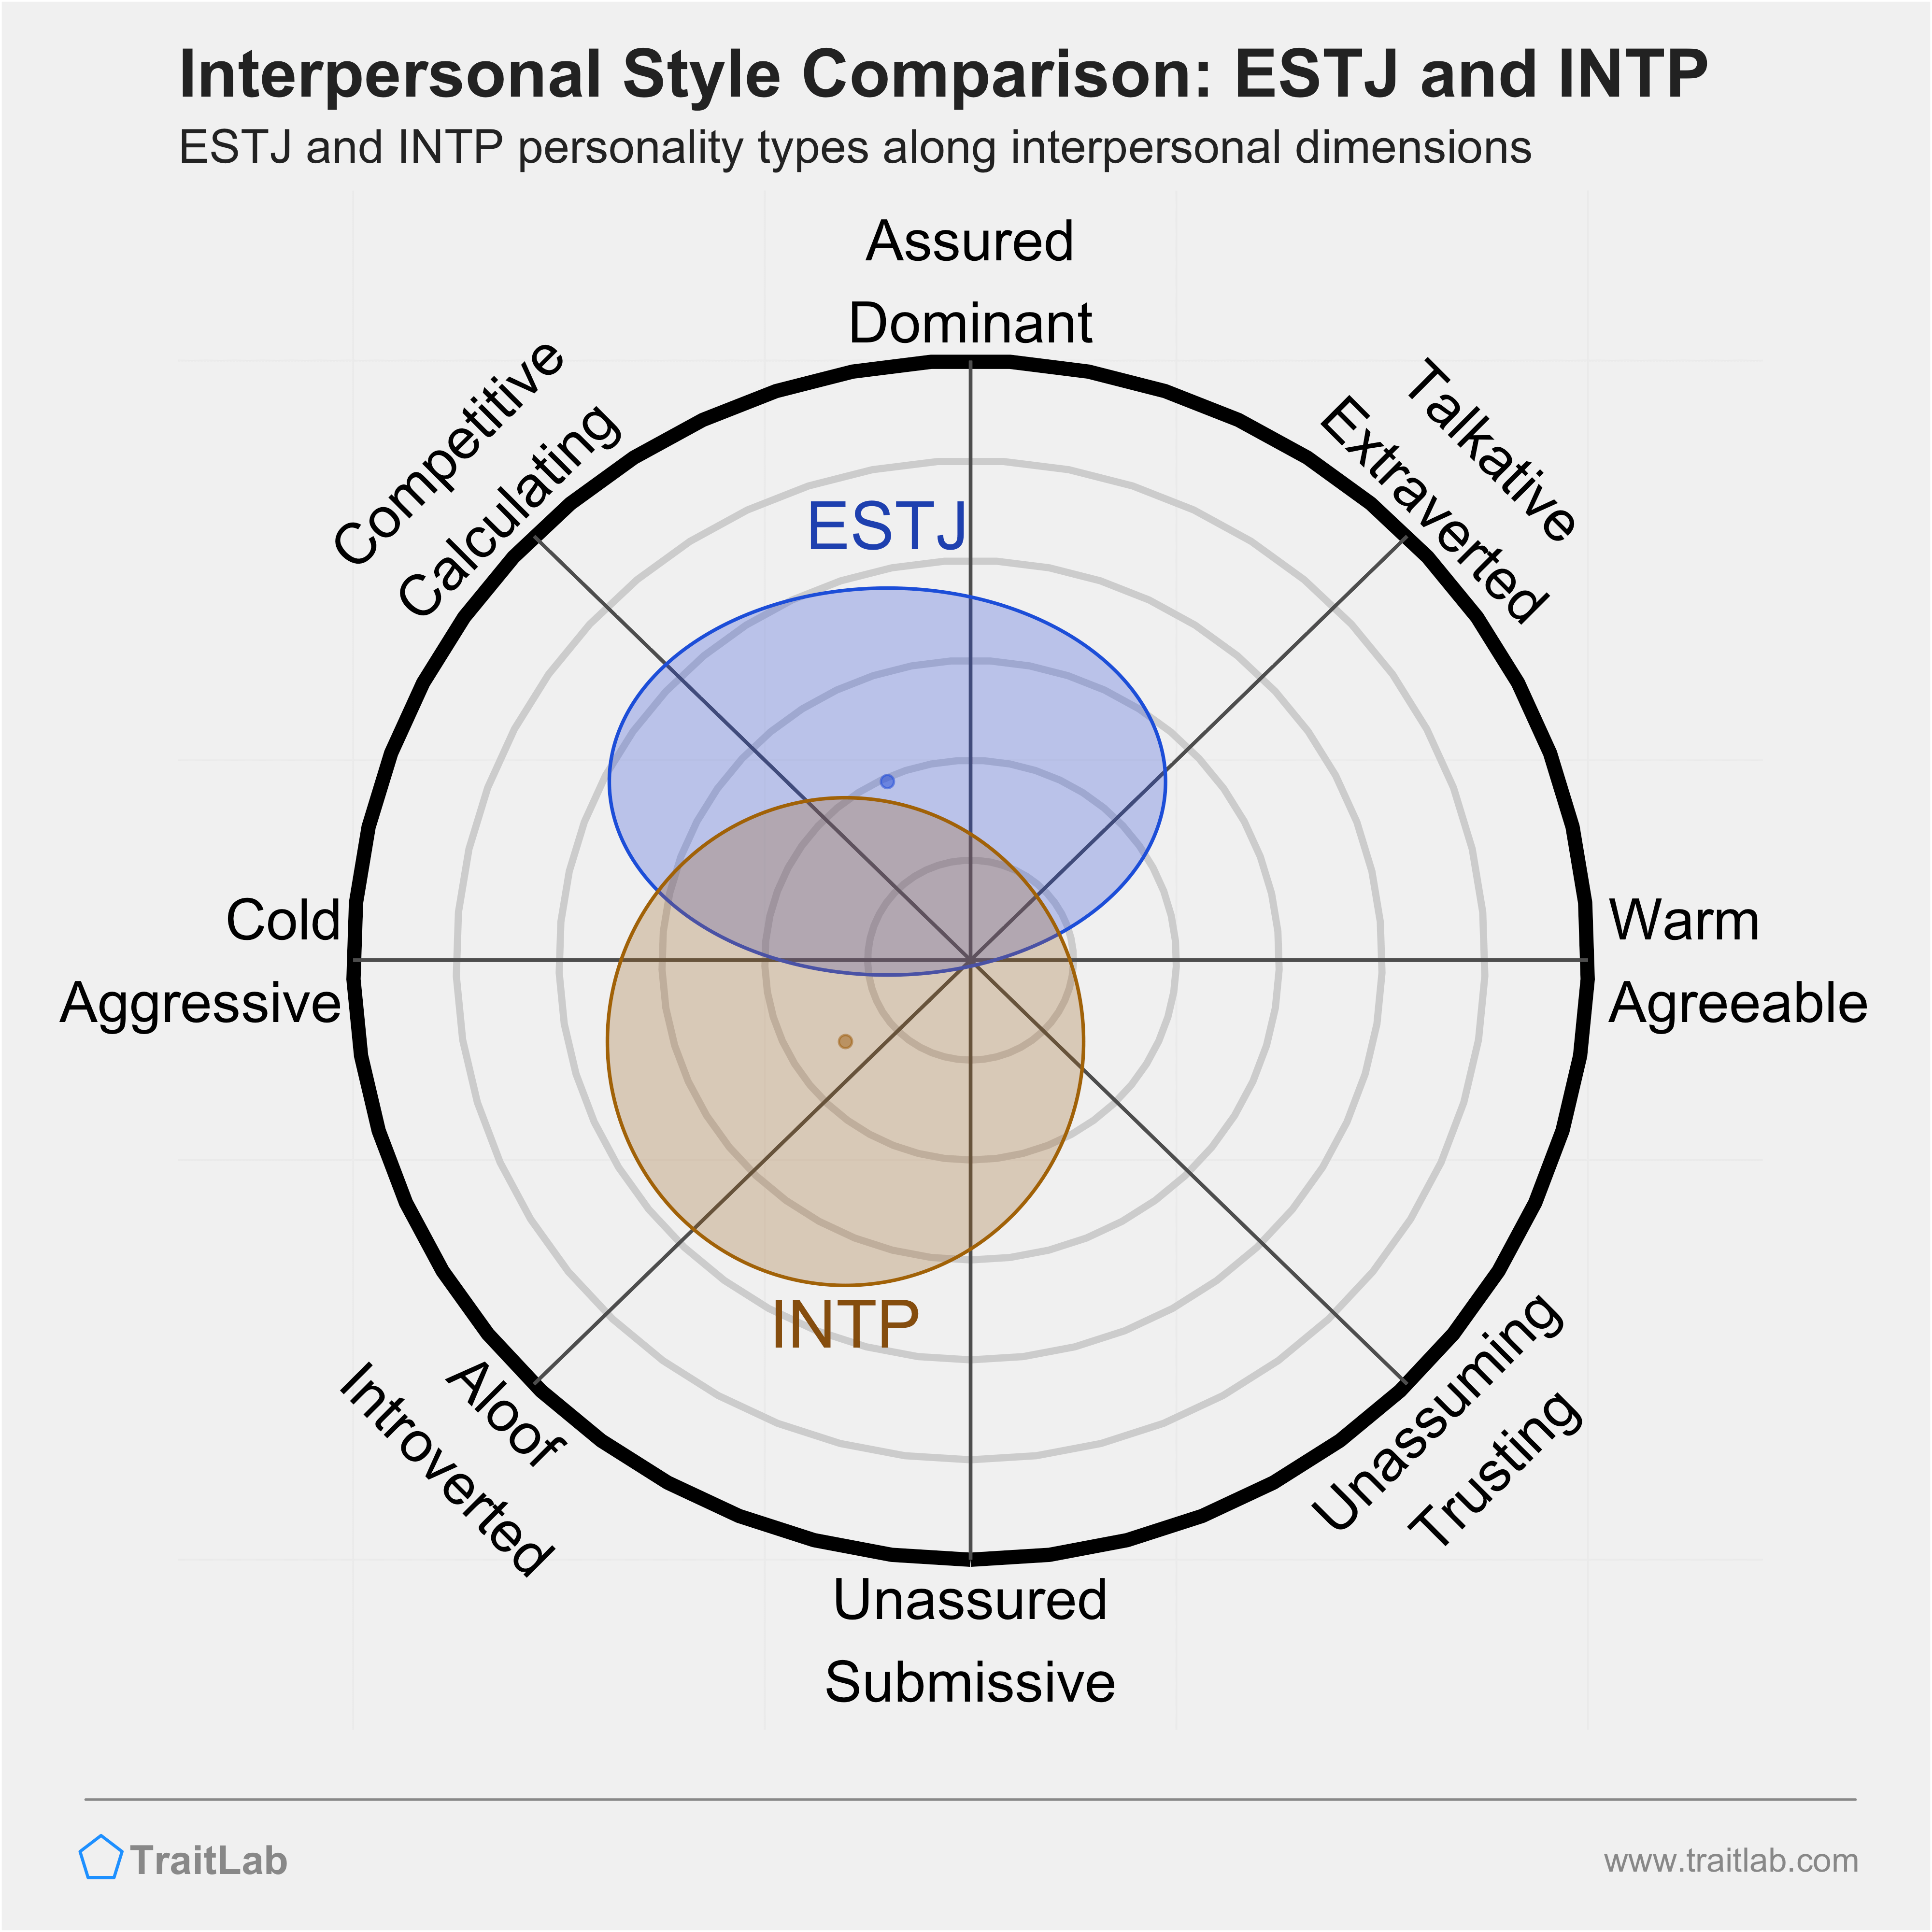 ESTJ and INTP comparison across interpersonal dimensions